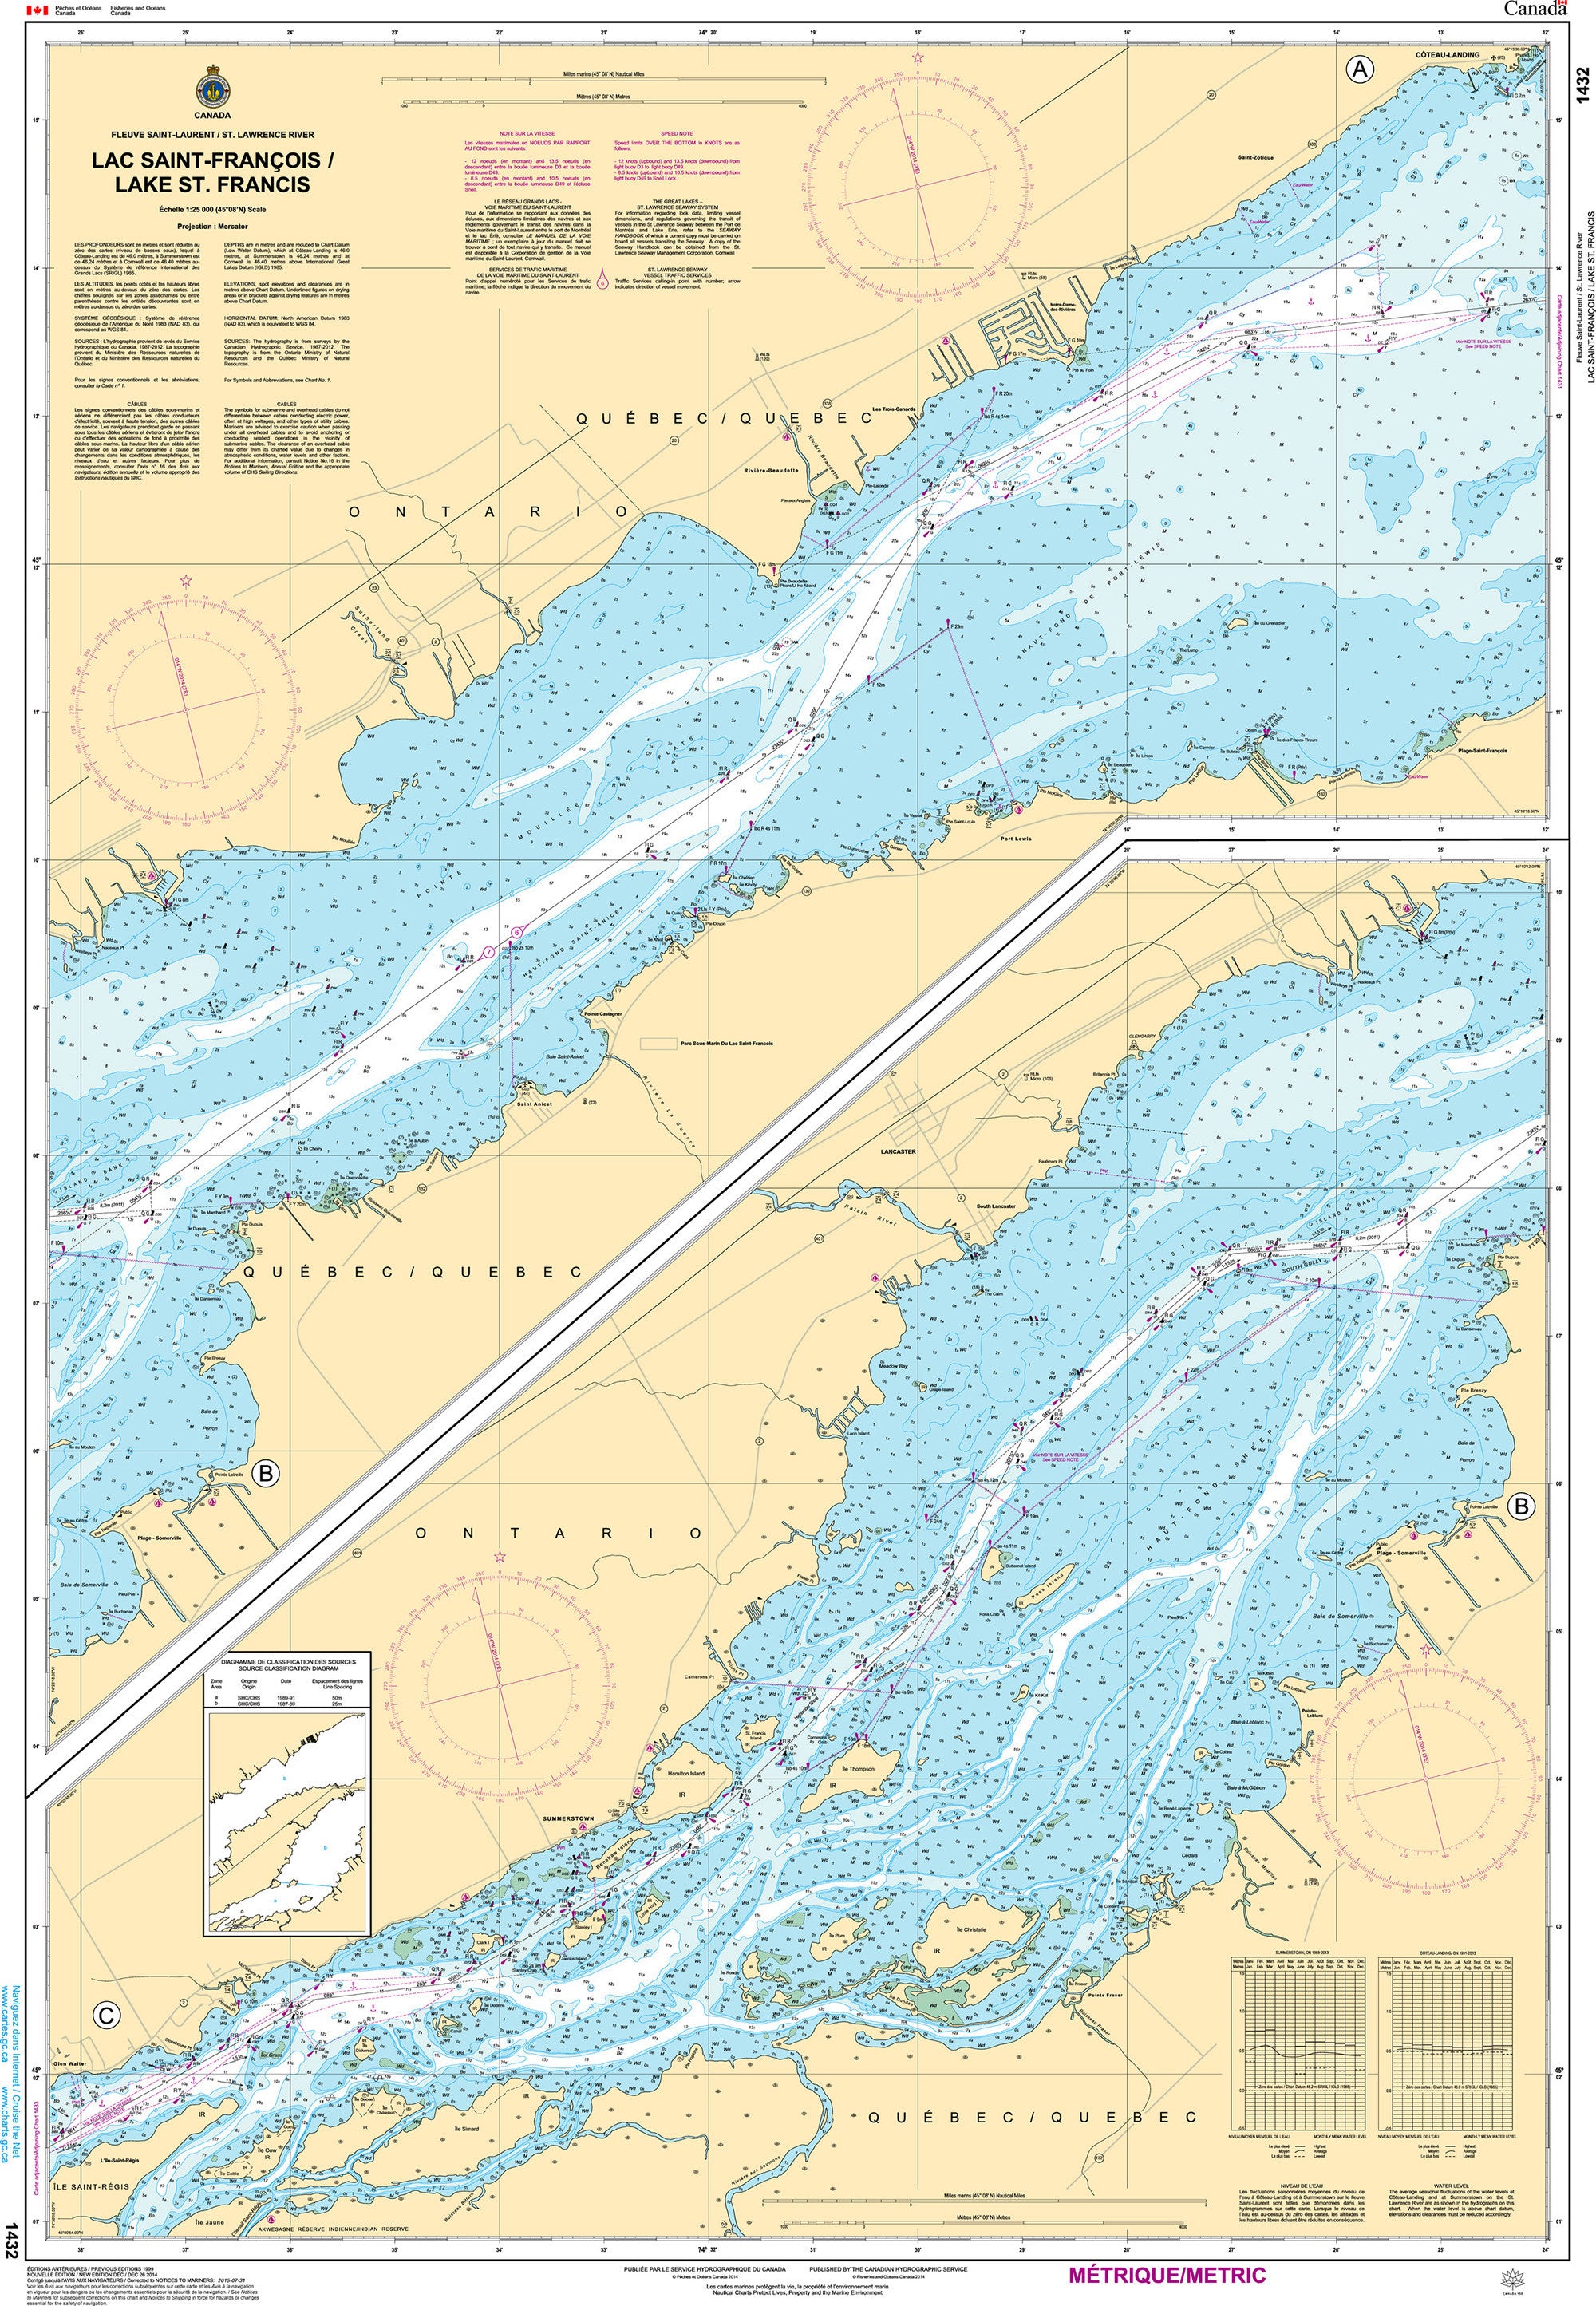 Canadian Hydrographic Service Nautical Chart CHS1432: Lac Saint-François/Lake St. Francis